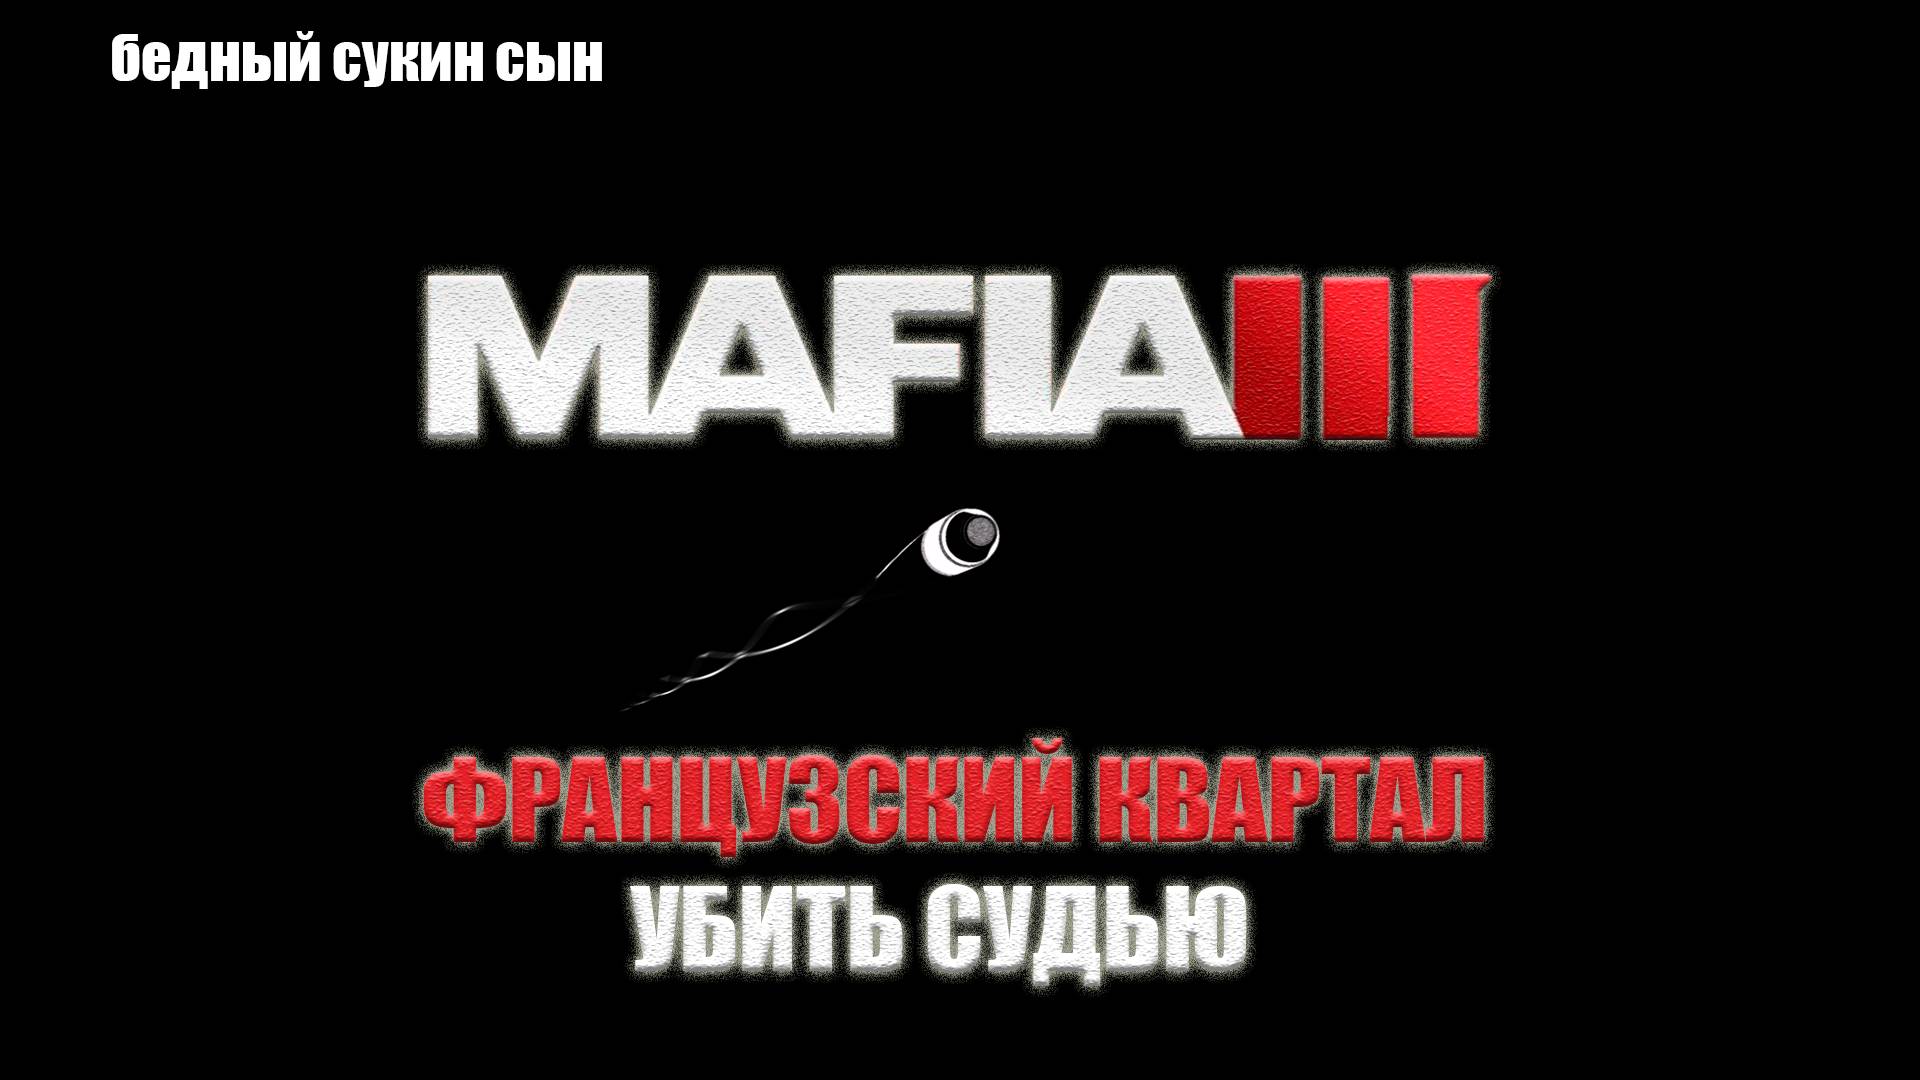 Mafia III - ФРАНЦУЗСКИЙ КВАРТАЛ